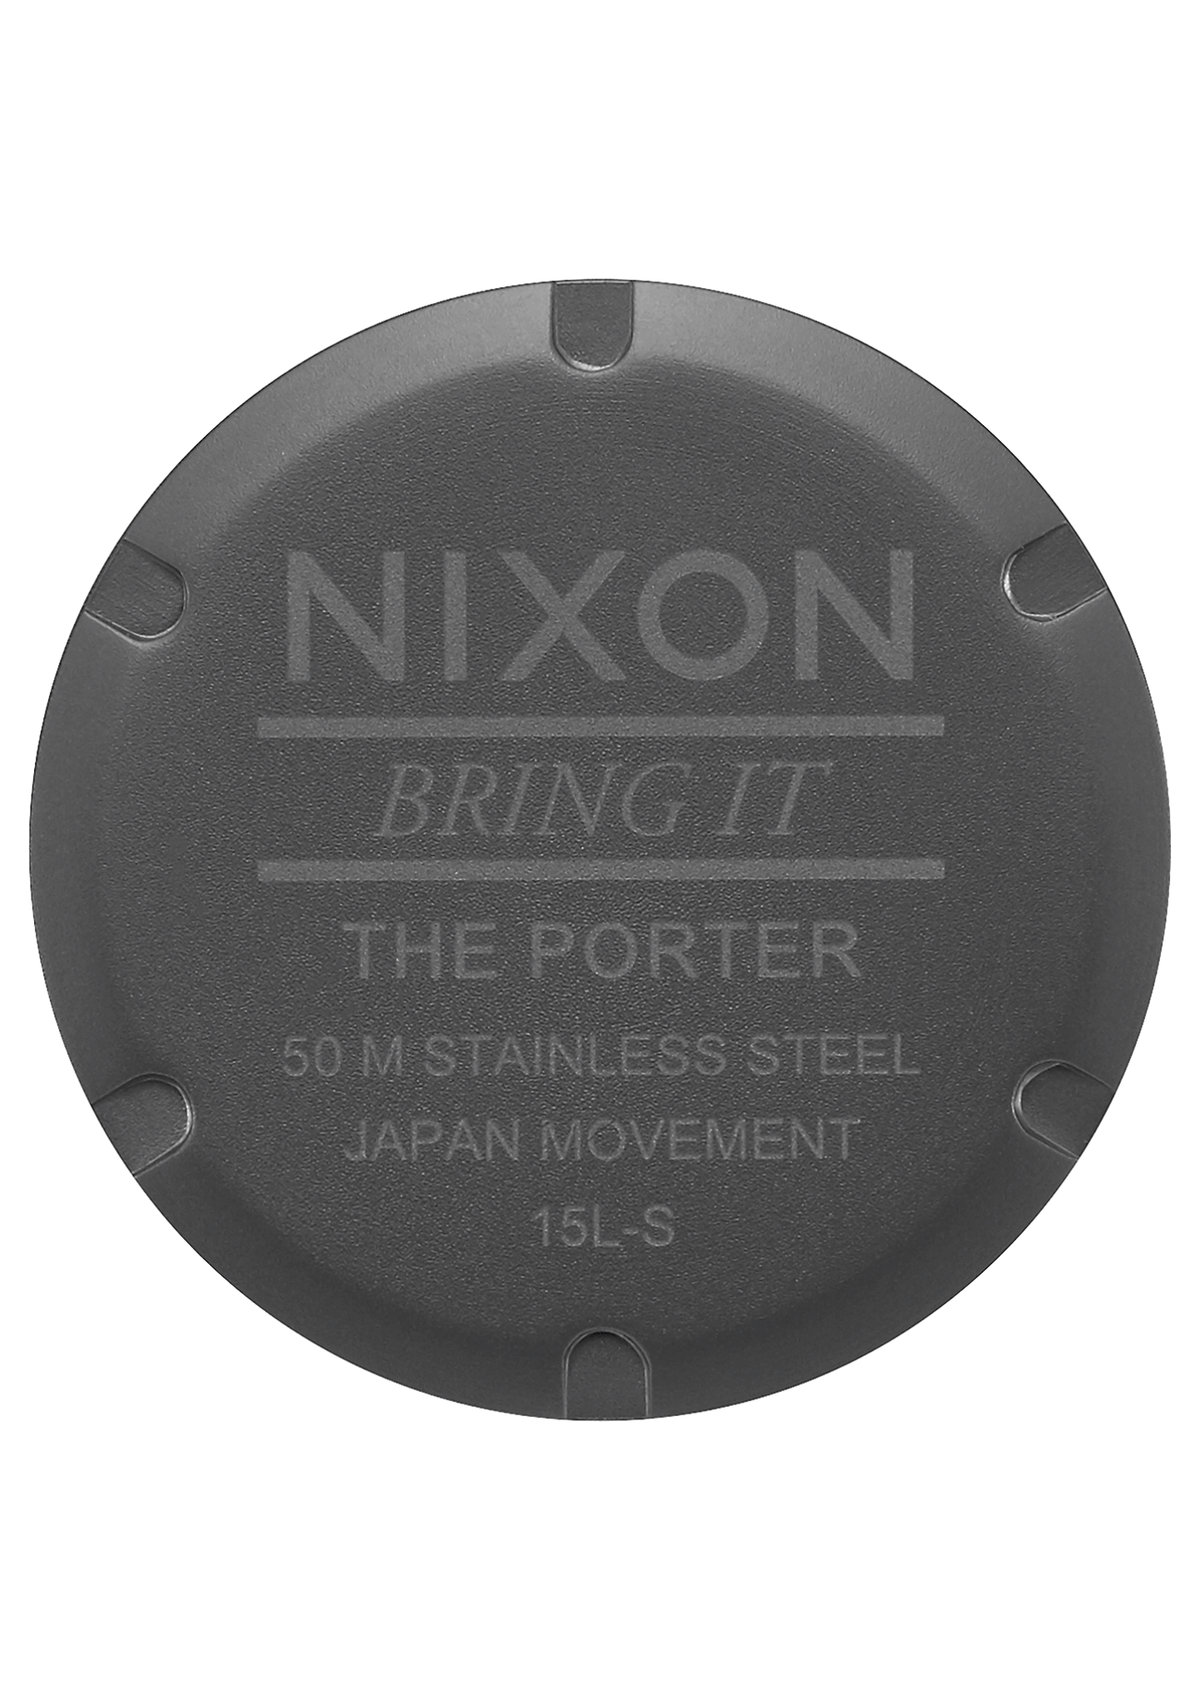 Nixon Watch - Porter 40mm Leather: Gunmetal/Charcoal/Taupe